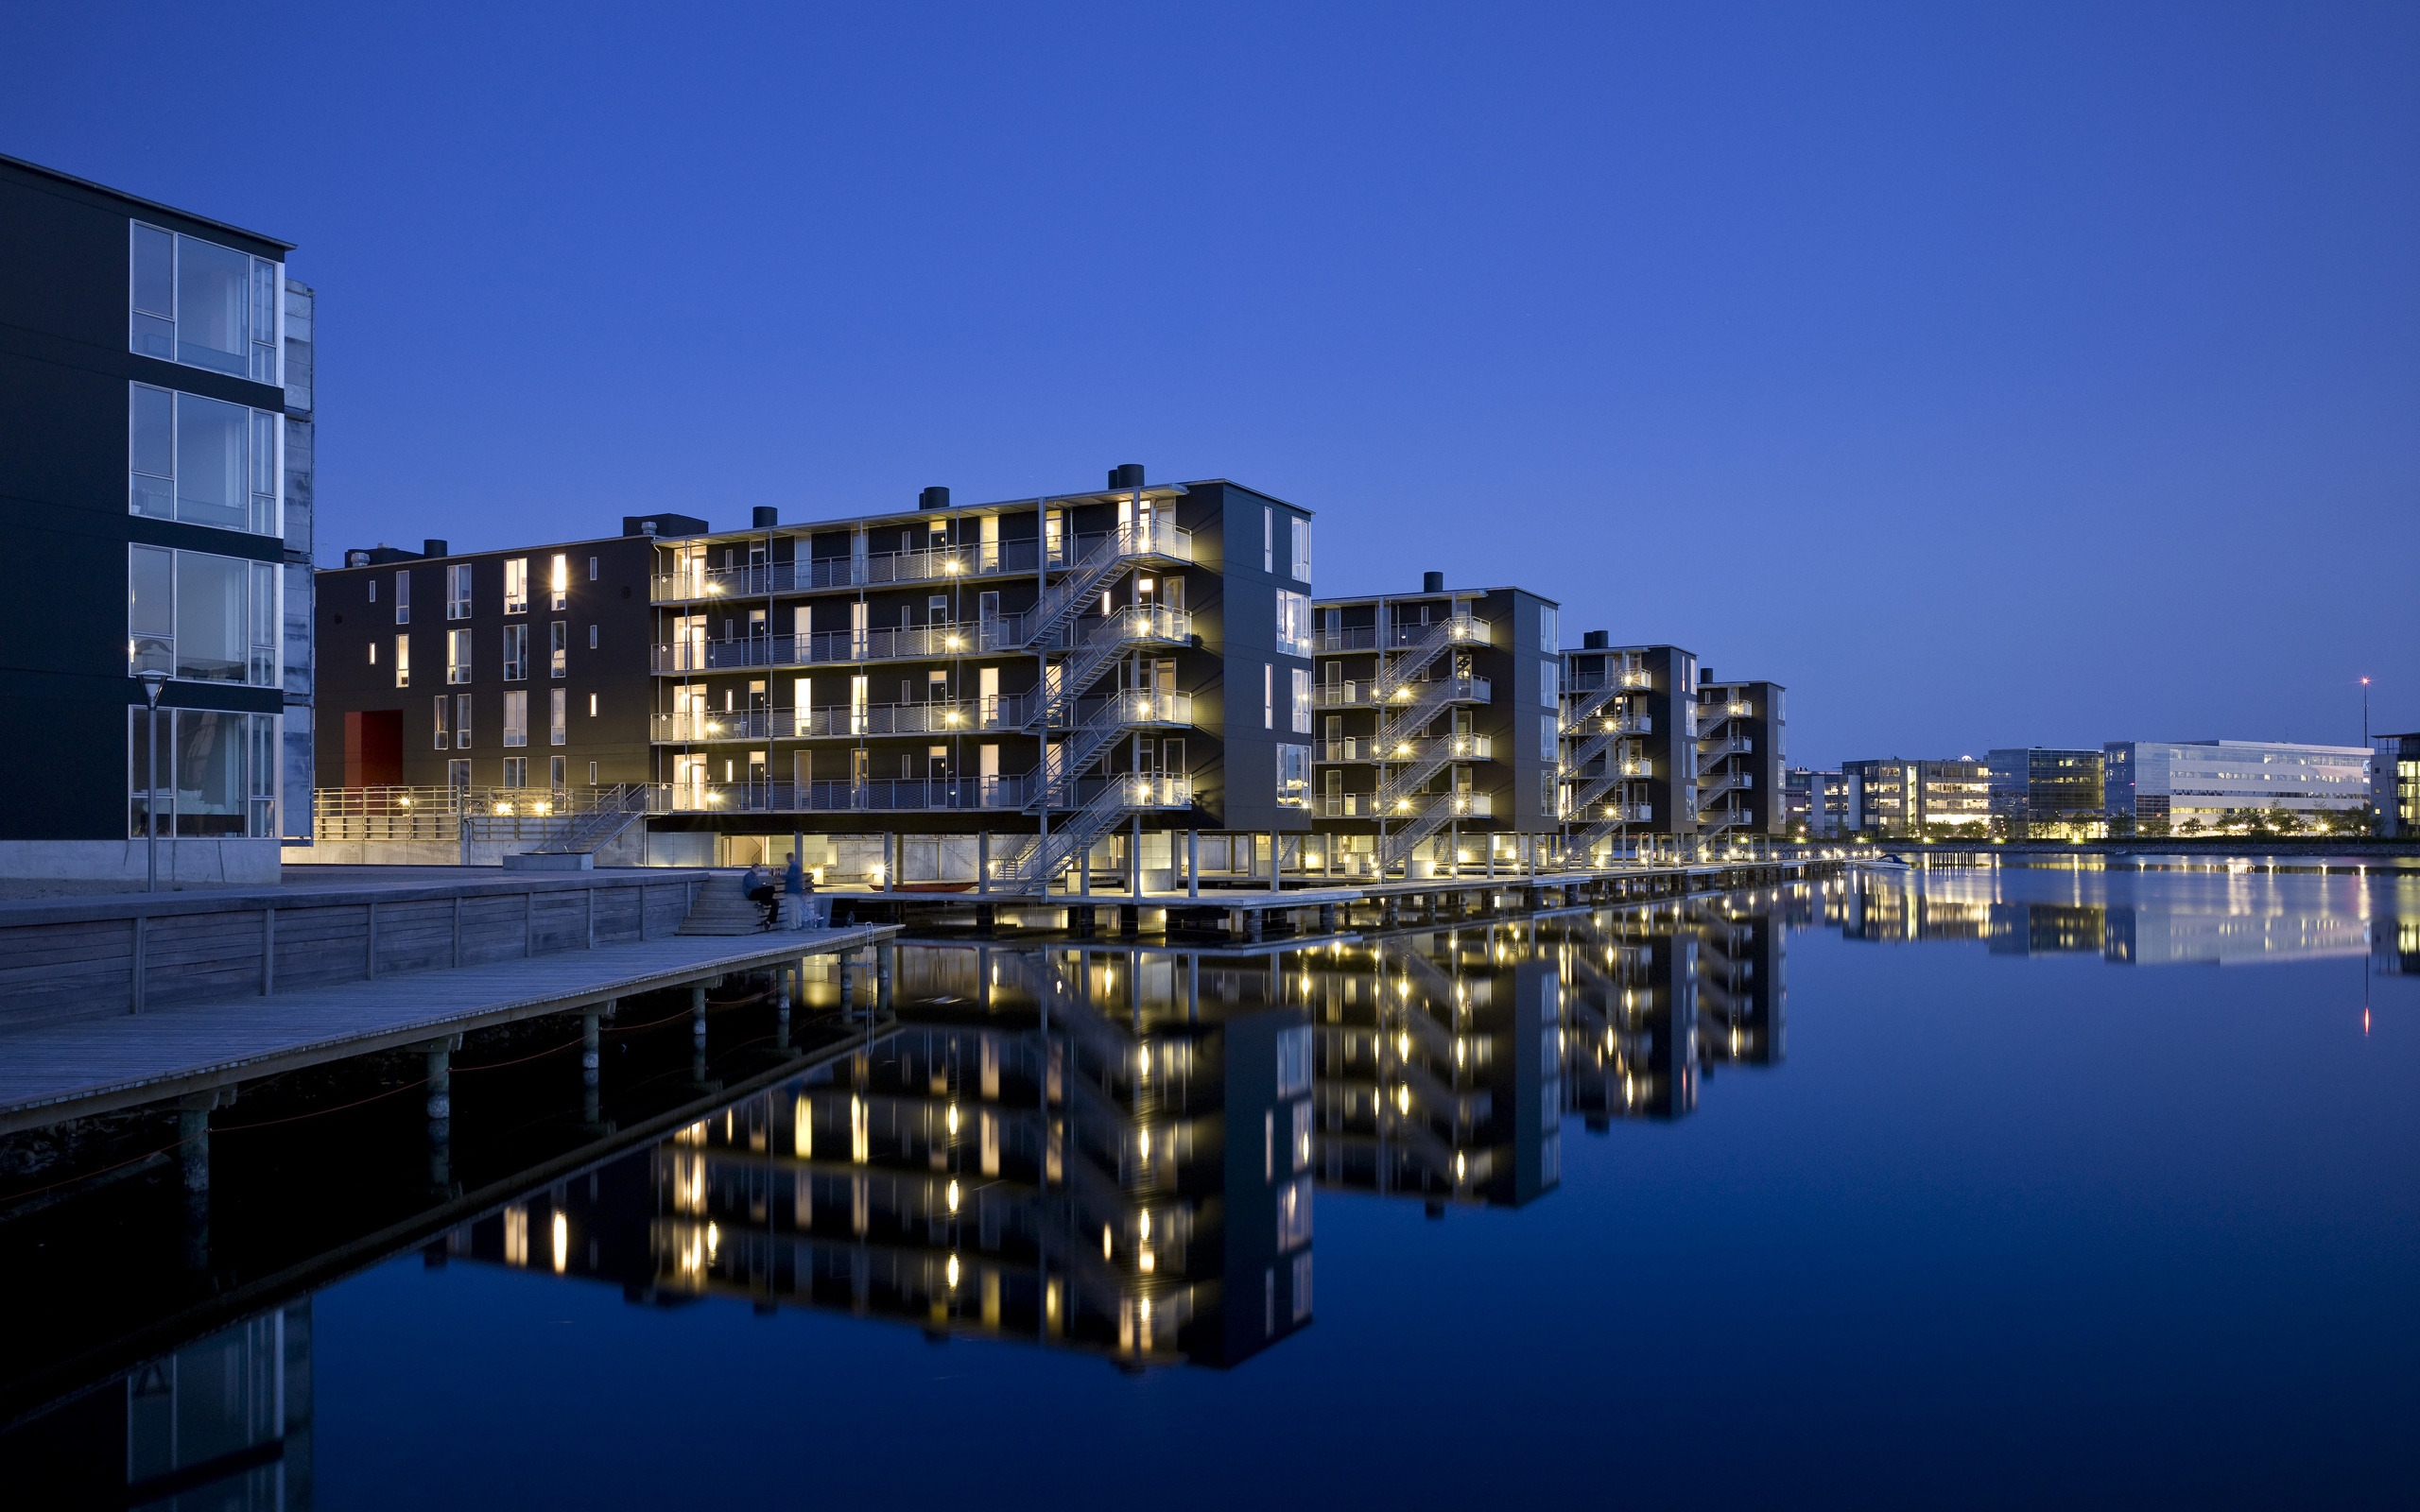 Teglvrkshavnen Block in Copenhagen for 2560 x 1600 widescreen resolution